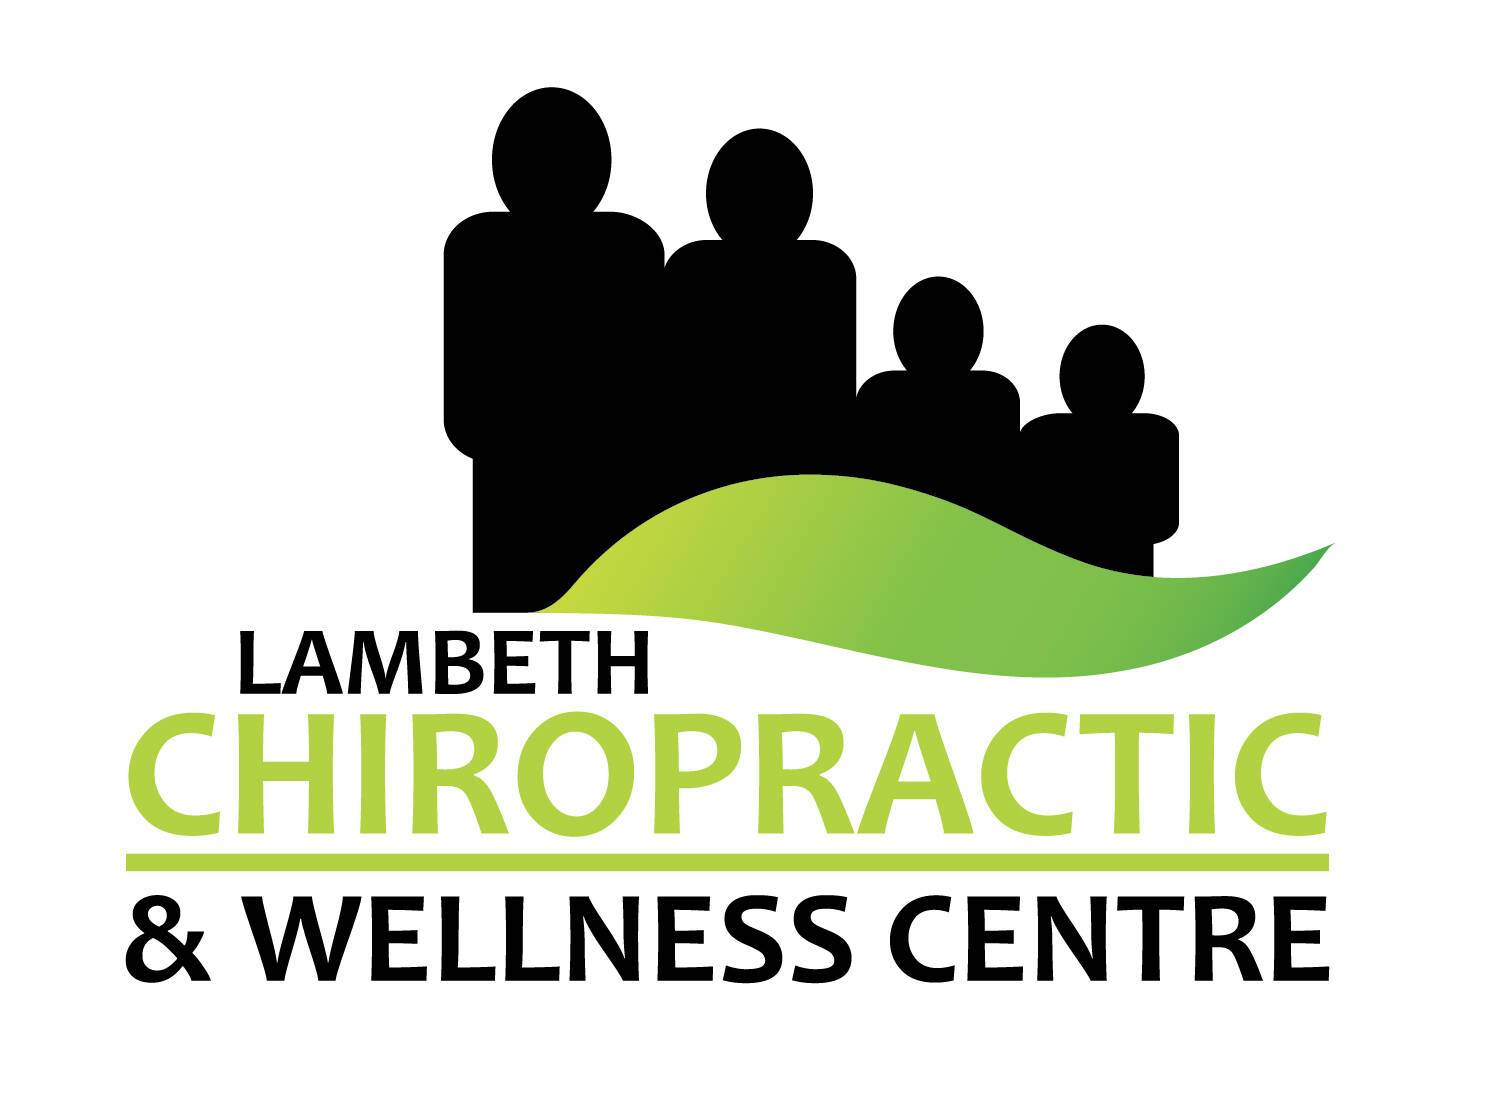 Lambeth Chiropractic & Wellness Centre